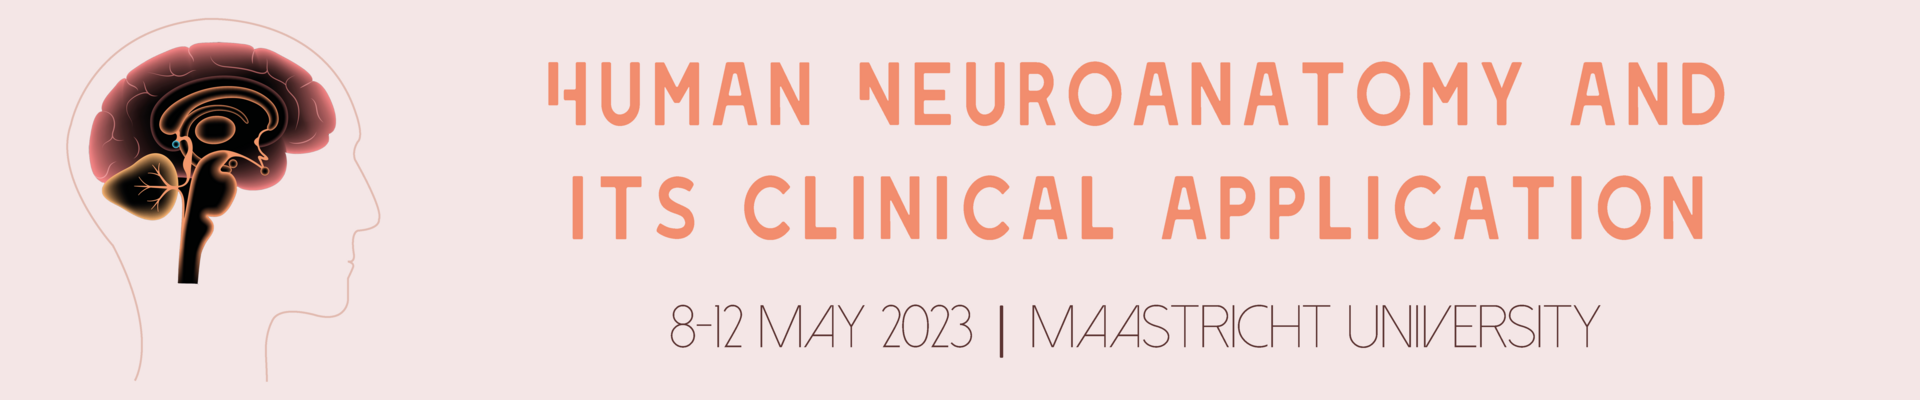 Human Neuroanatomy course